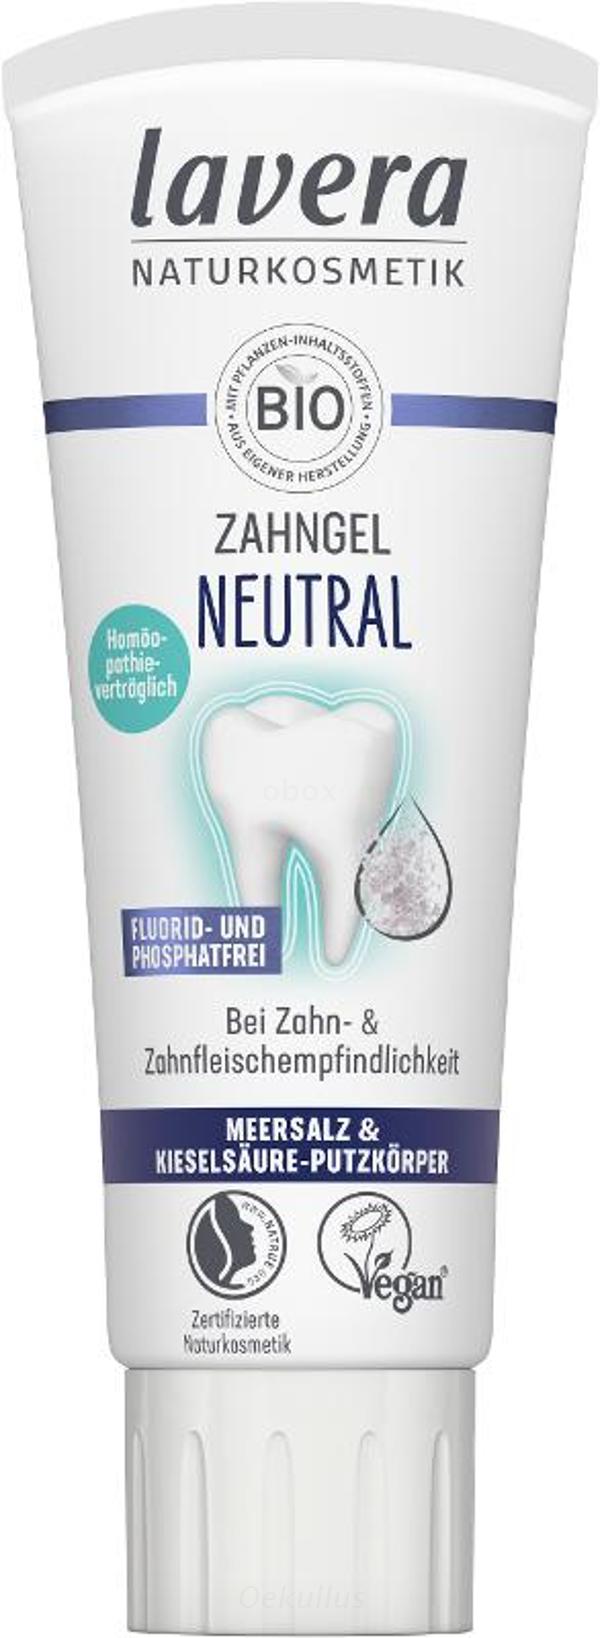 Produktfoto zu Neutral Zahngel